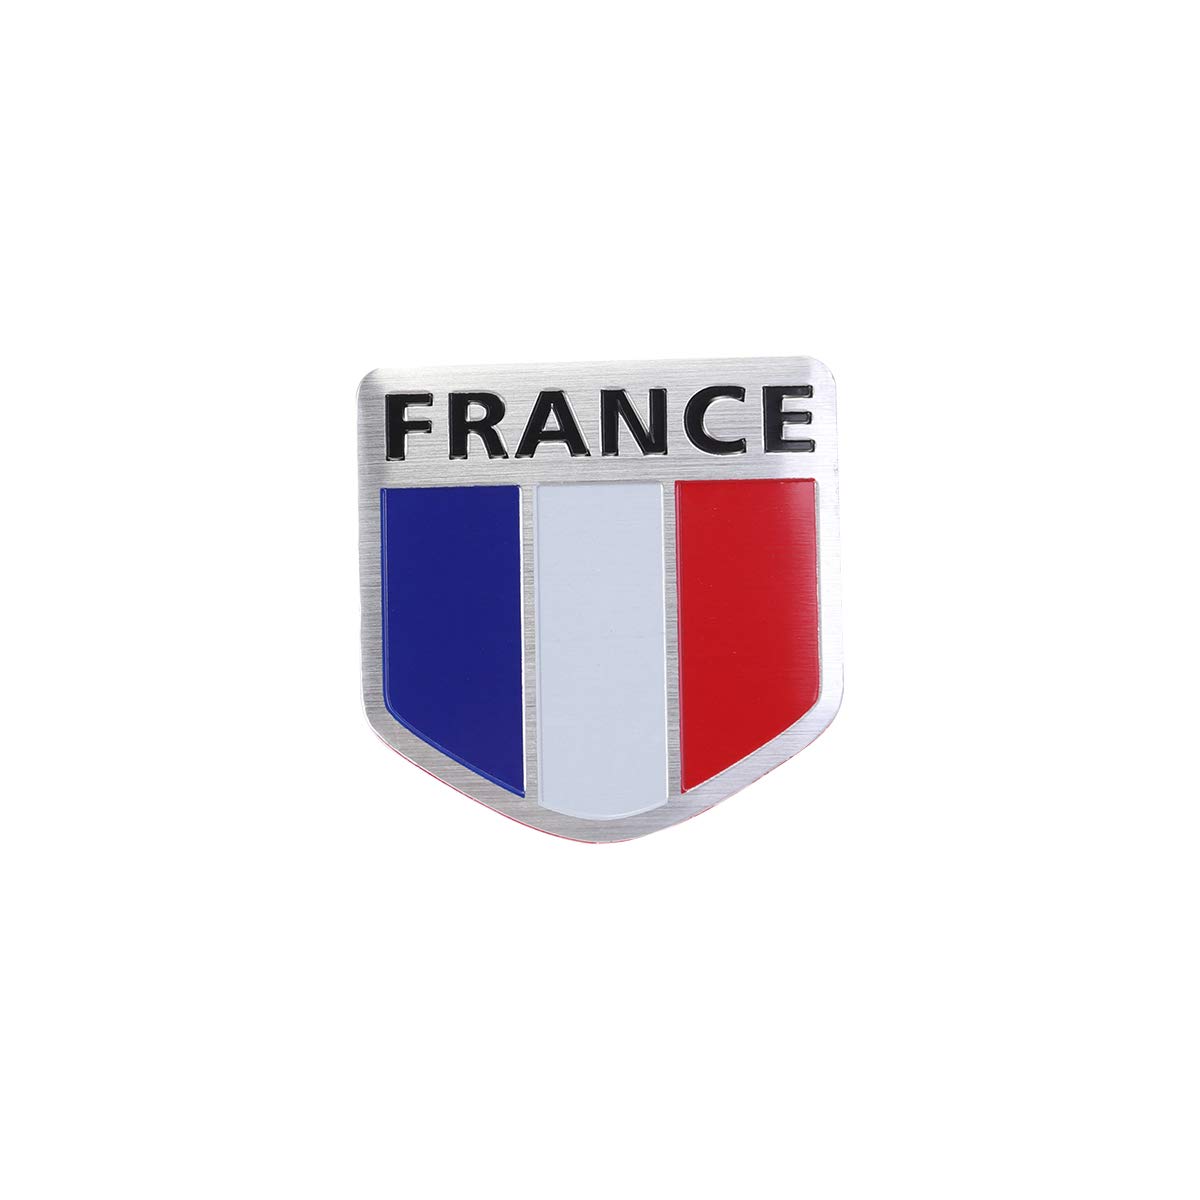 Frankreich Flagge Automobil Magnete Nationalflagge Patriotischen Auto Aufkleber 3D Metall Emblem Autoaufkleber Auto Dekoration von VOSAREA